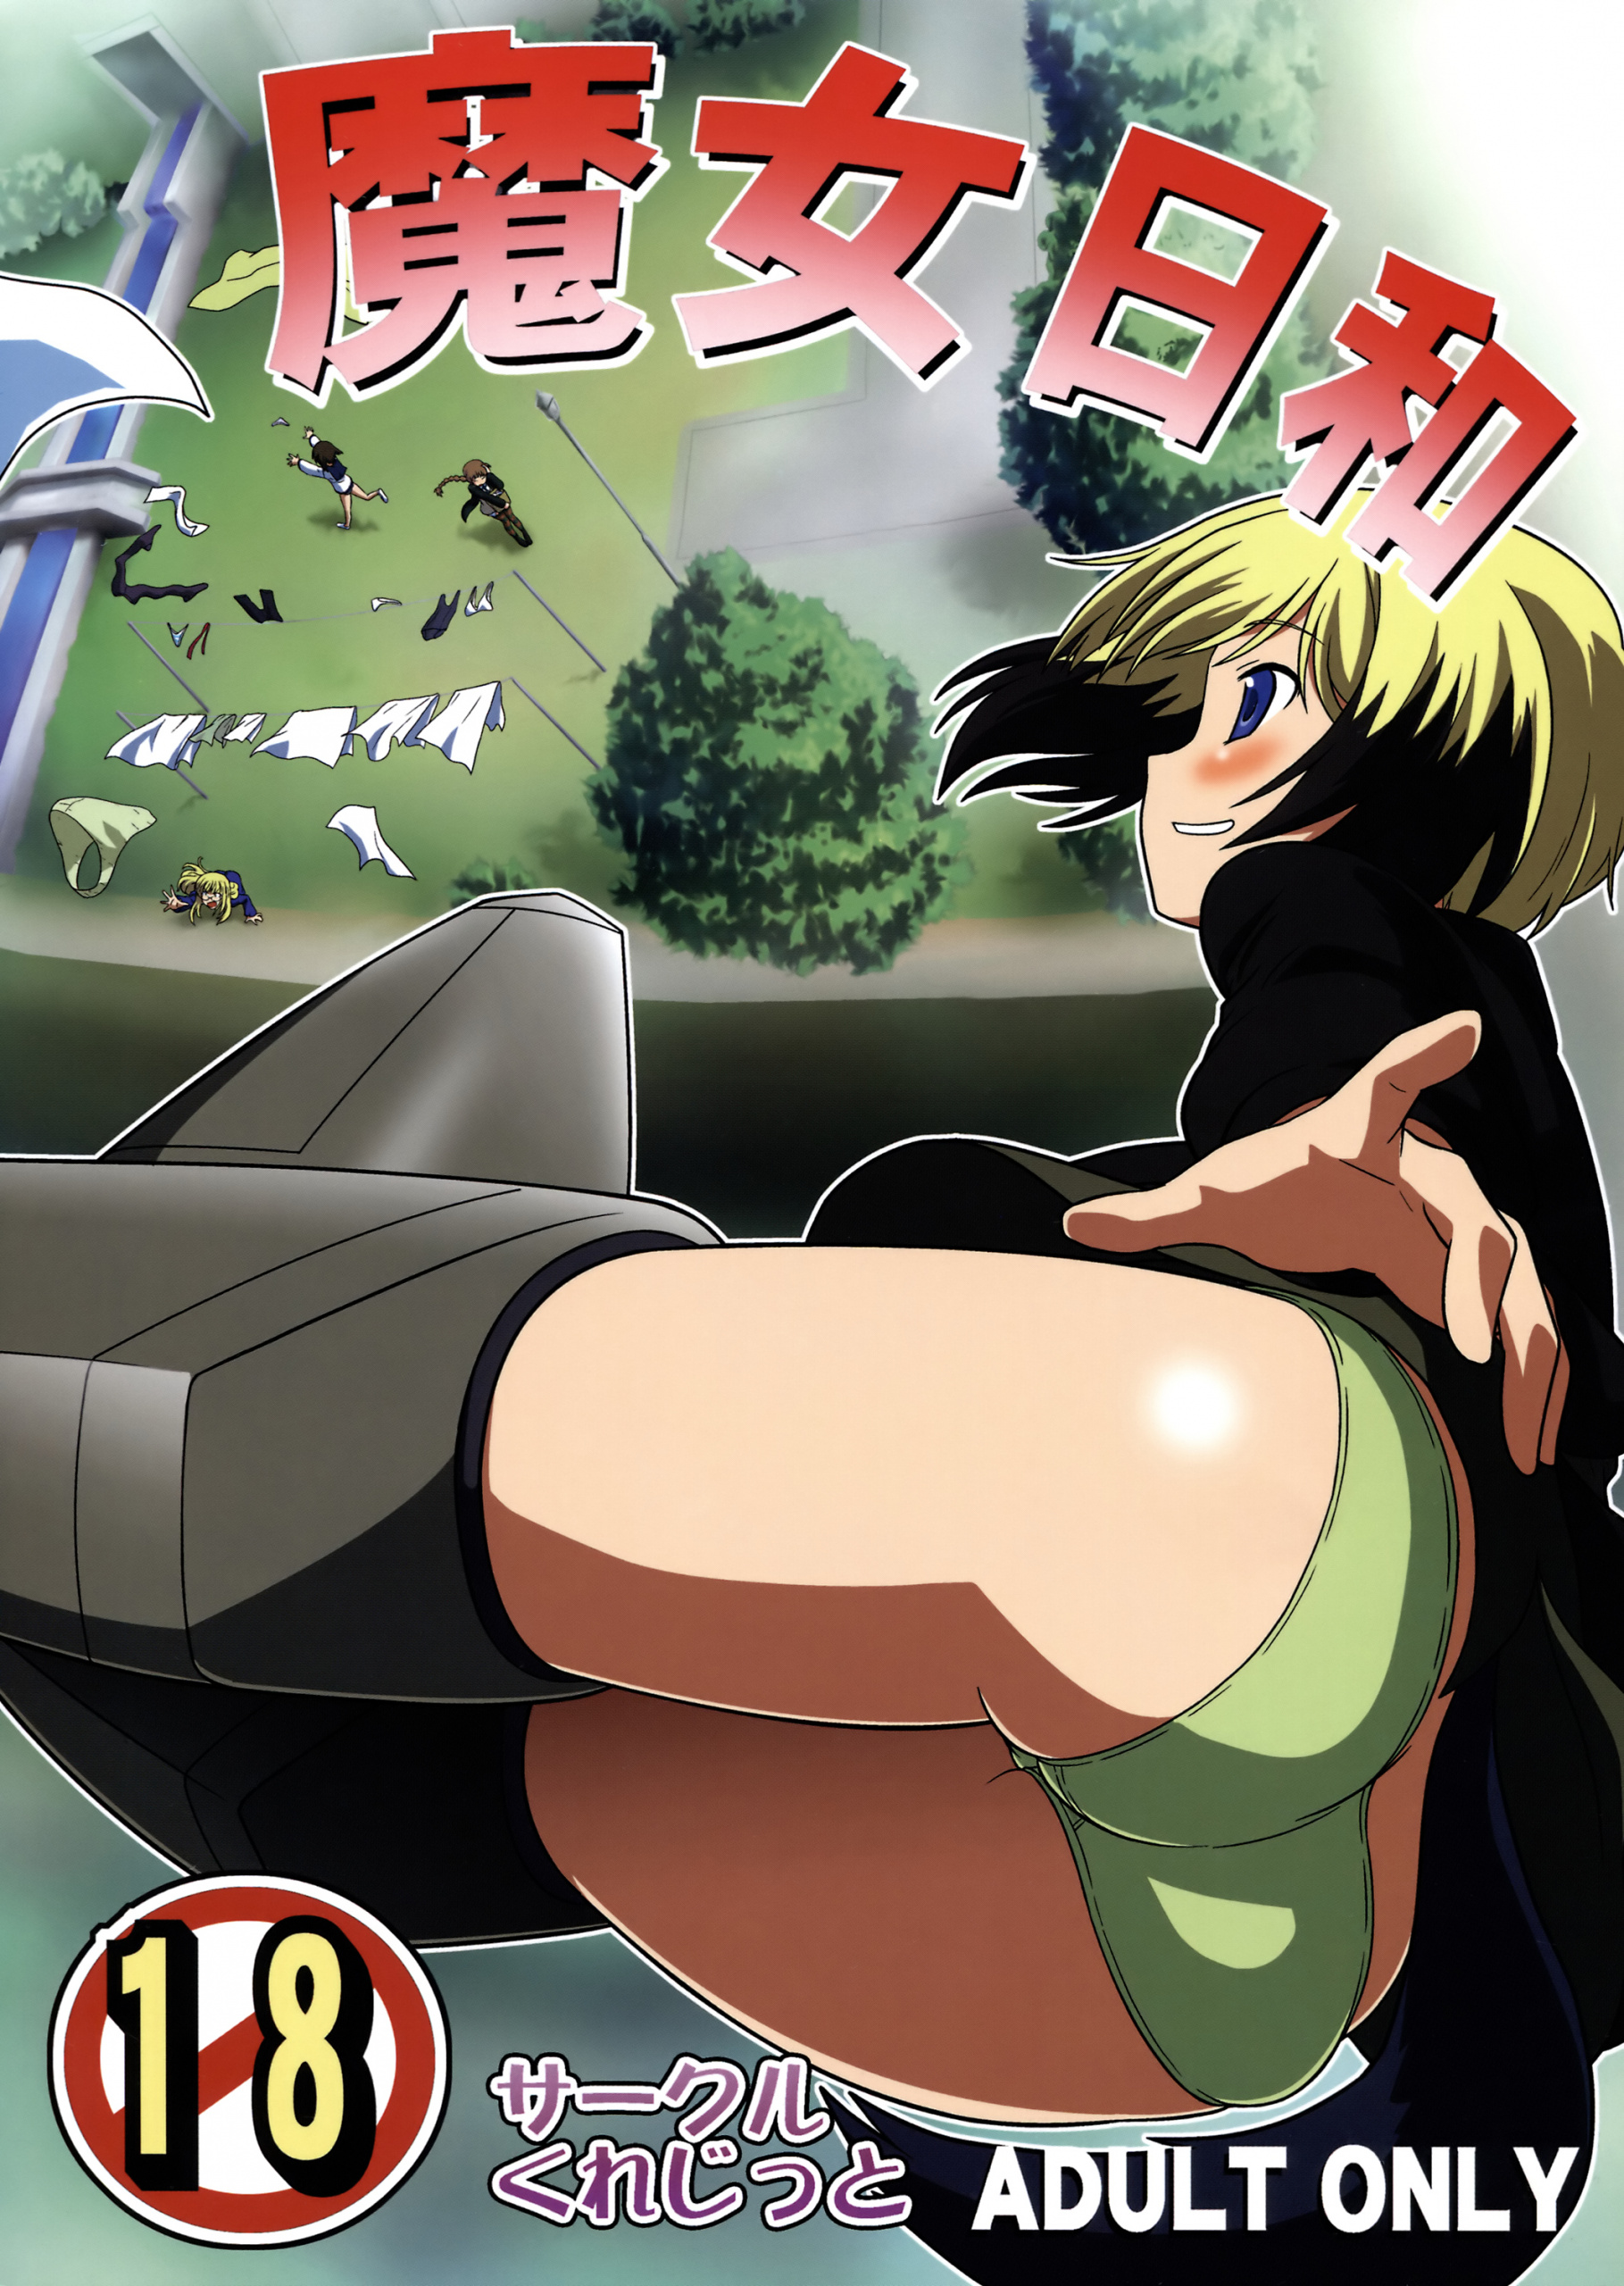 Anime Girl Lesbian Comic - Yuri: Girls daily games - Multporn Comics & Hentai manga